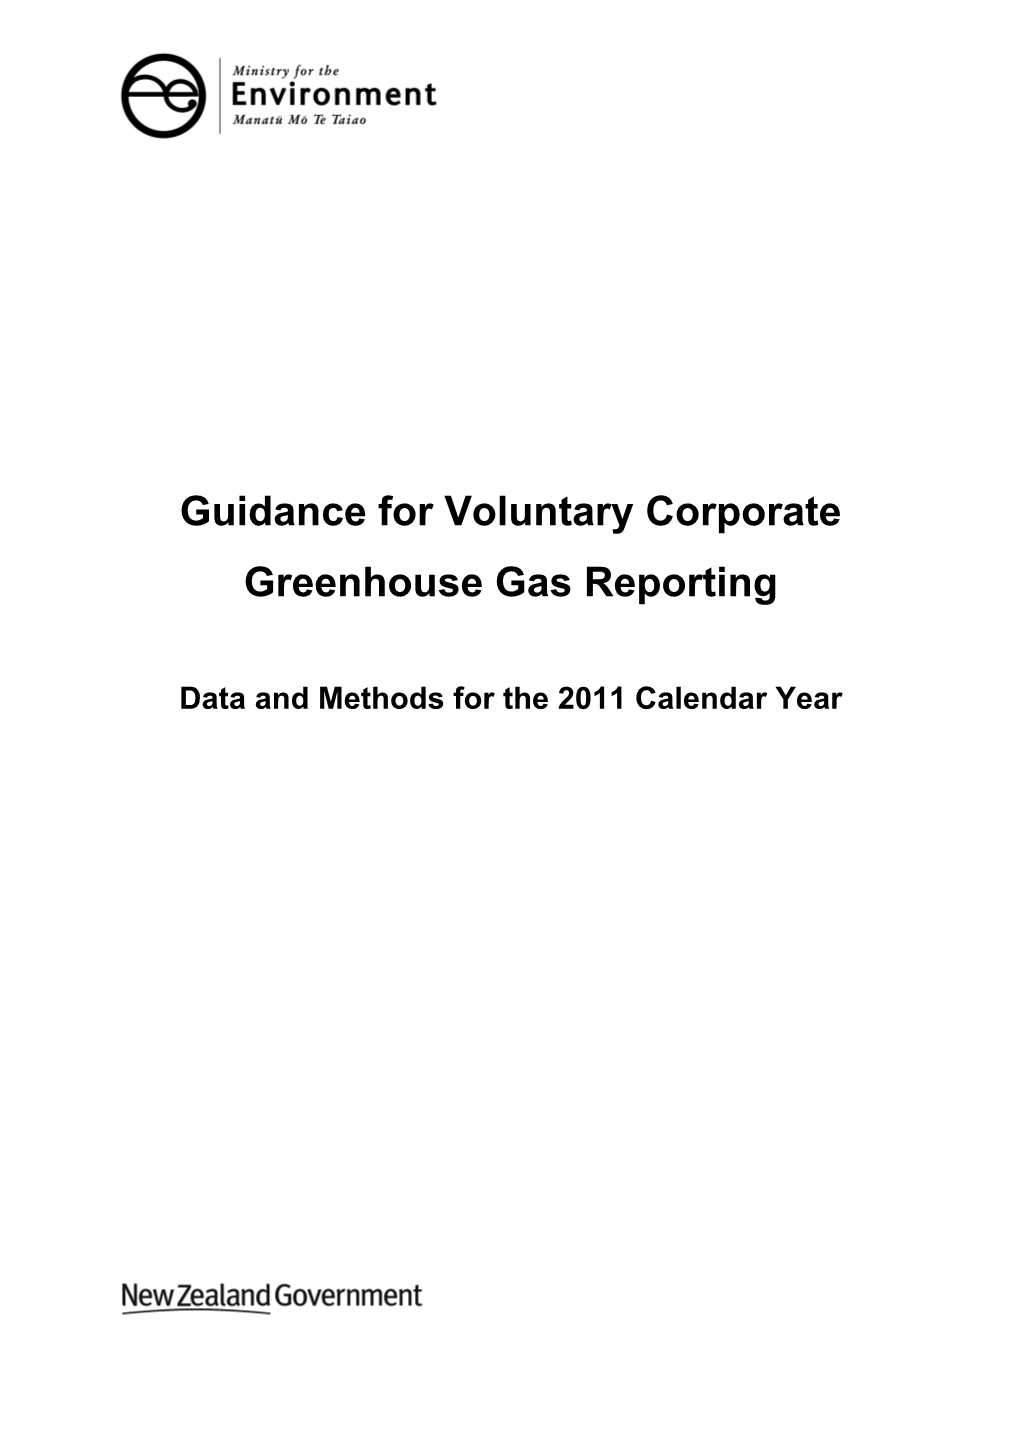 Voluntary Greenhouse Gas Reporting - 2011 Calendar Year Final